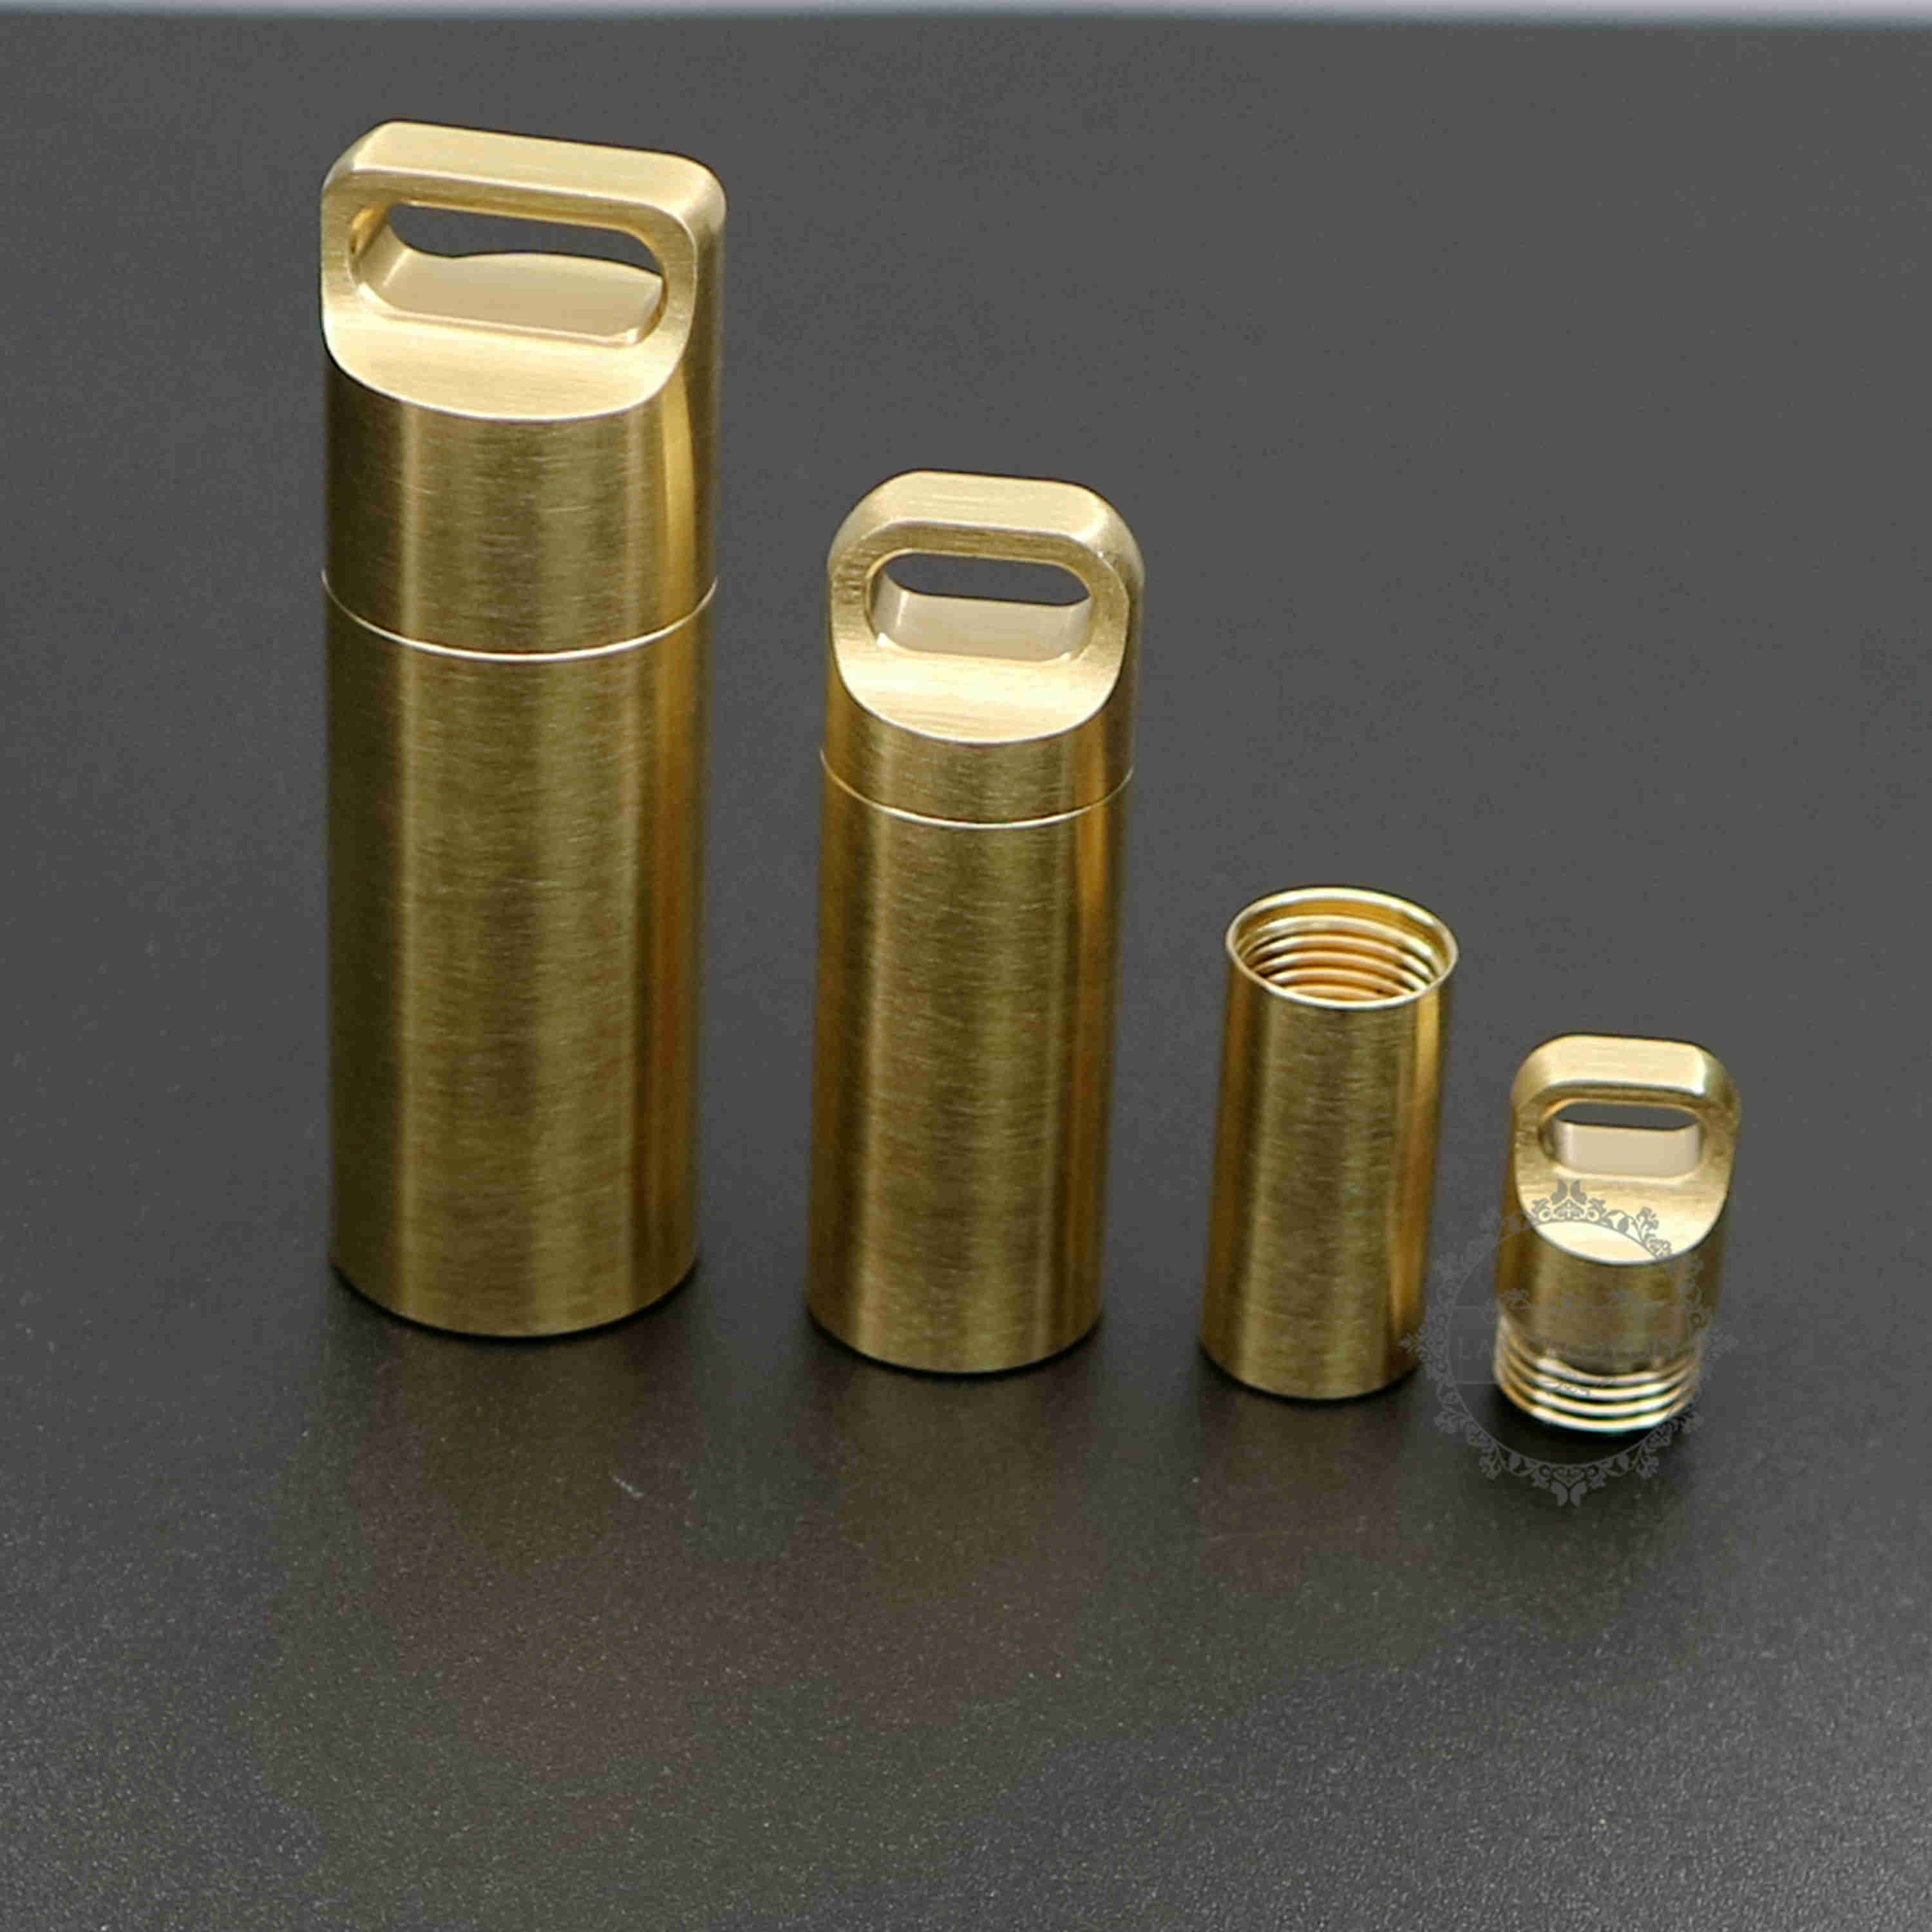 1pcs raw brass seal EDC medicine tablet storage box cremation bottle perfume holder ash wish vial pendant charm DIY supplies 1800401-1 - Click Image to Close